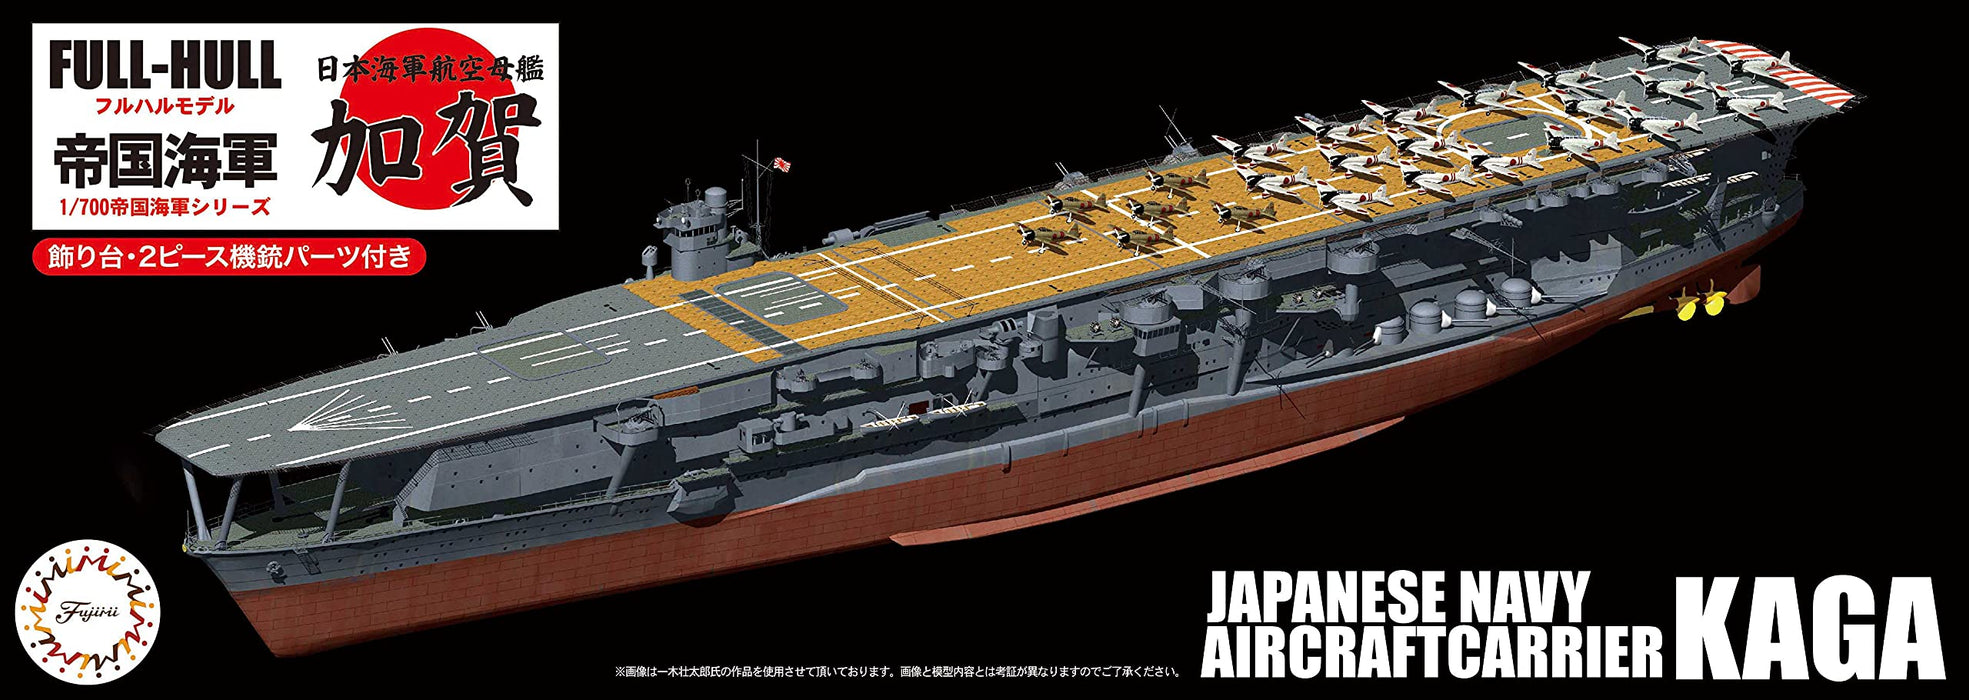 1/700 Fujimi Kaga Aircraft Carrier Model Plastic Model